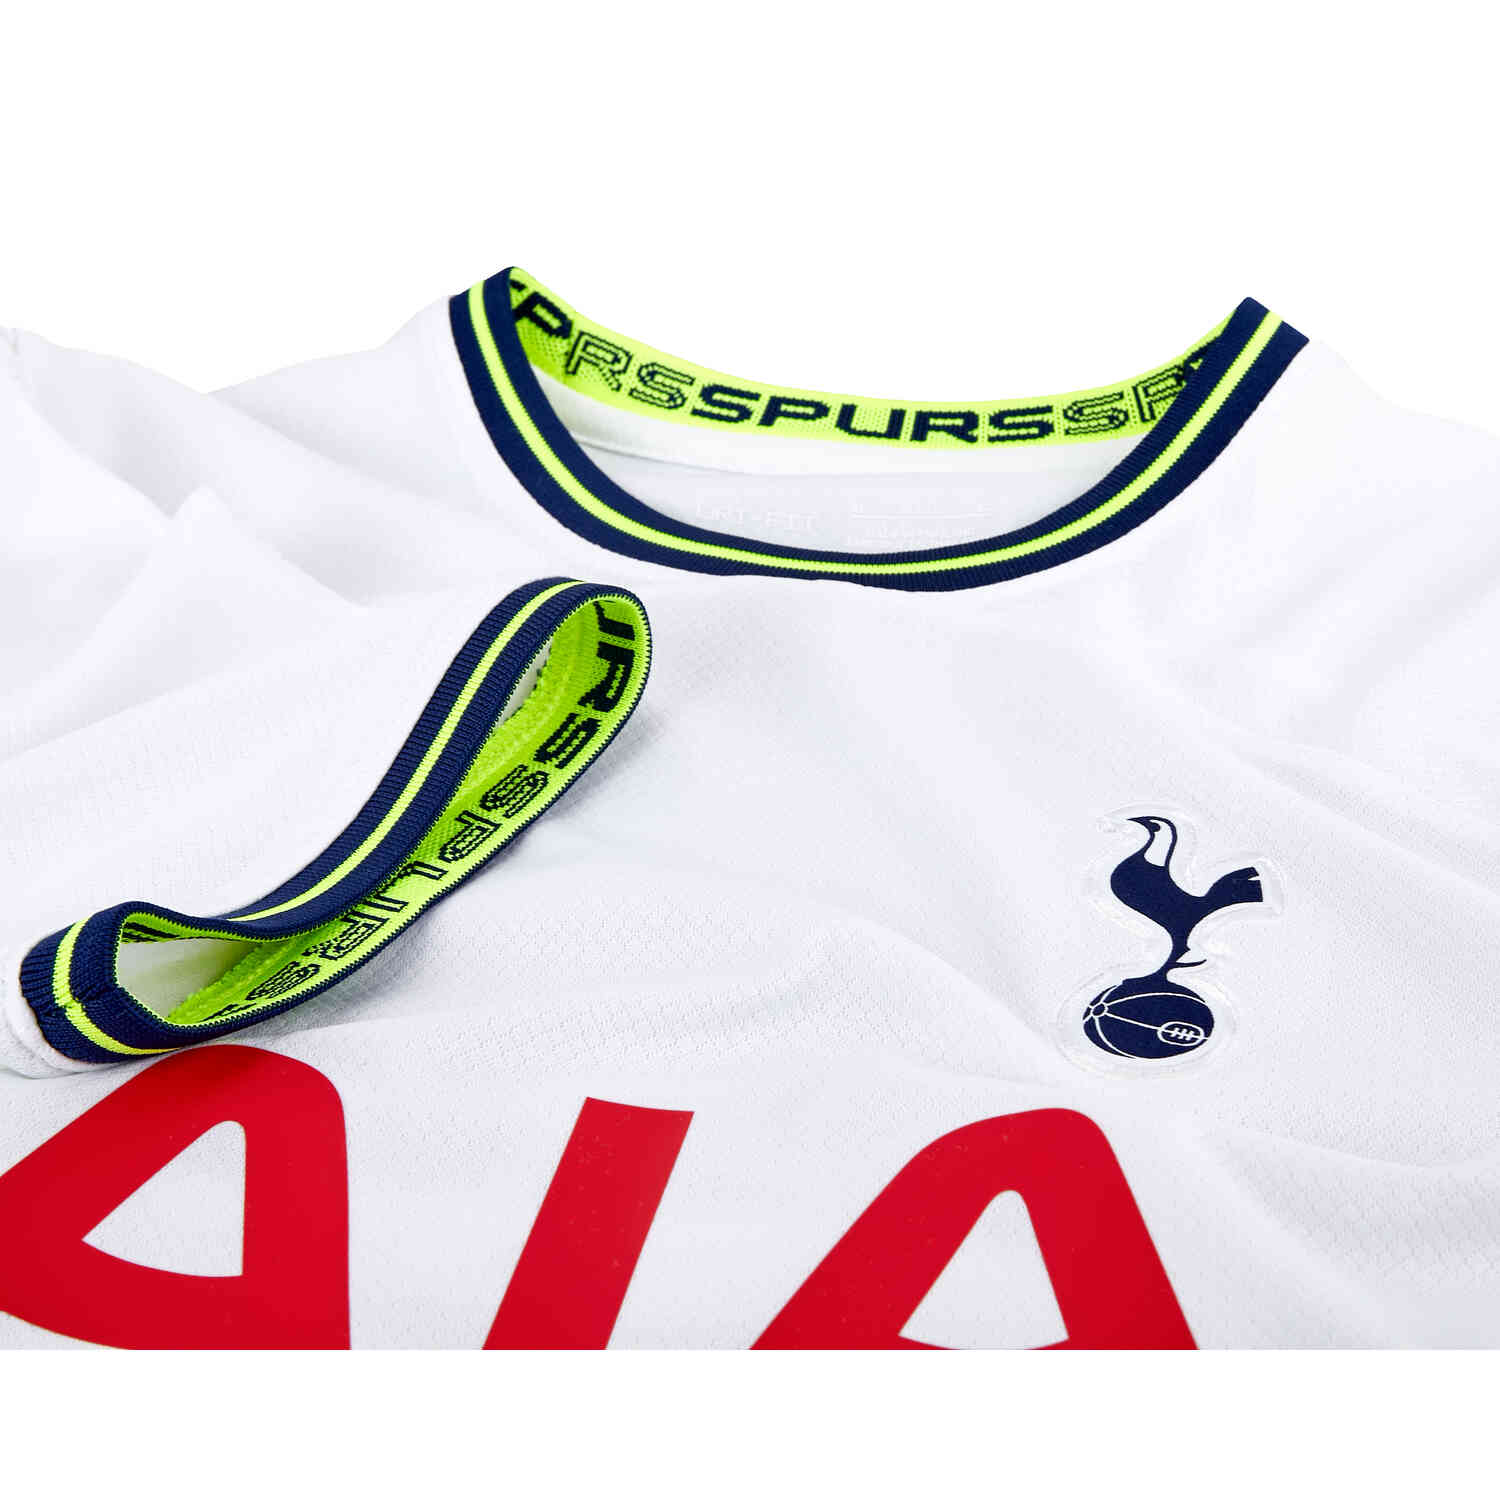 Harry Kane Tottenham 23/24 Home Jersey by Nike – Arena Jerseys